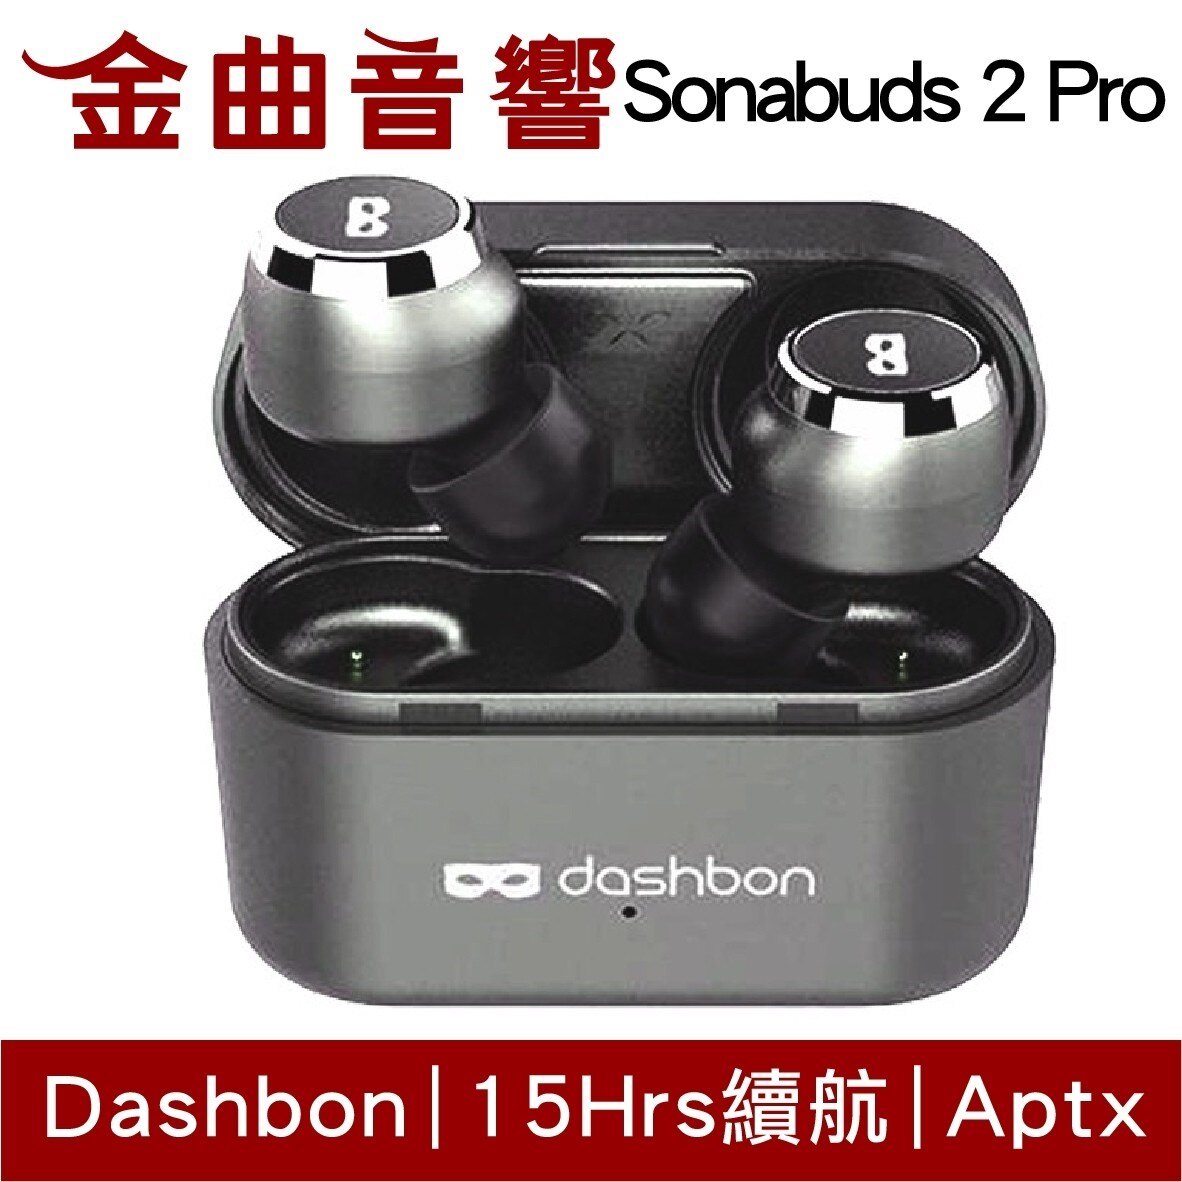 Dashbon Sonabuds 2 Pro 真無線藍芽耳機 黑色 藍芽5.0 15Hrs | 金曲音響。人氣店家金曲音響的有最棒的商品。快到日本NO.1的Rakuten樂天市場的安全環境中盡情網路購